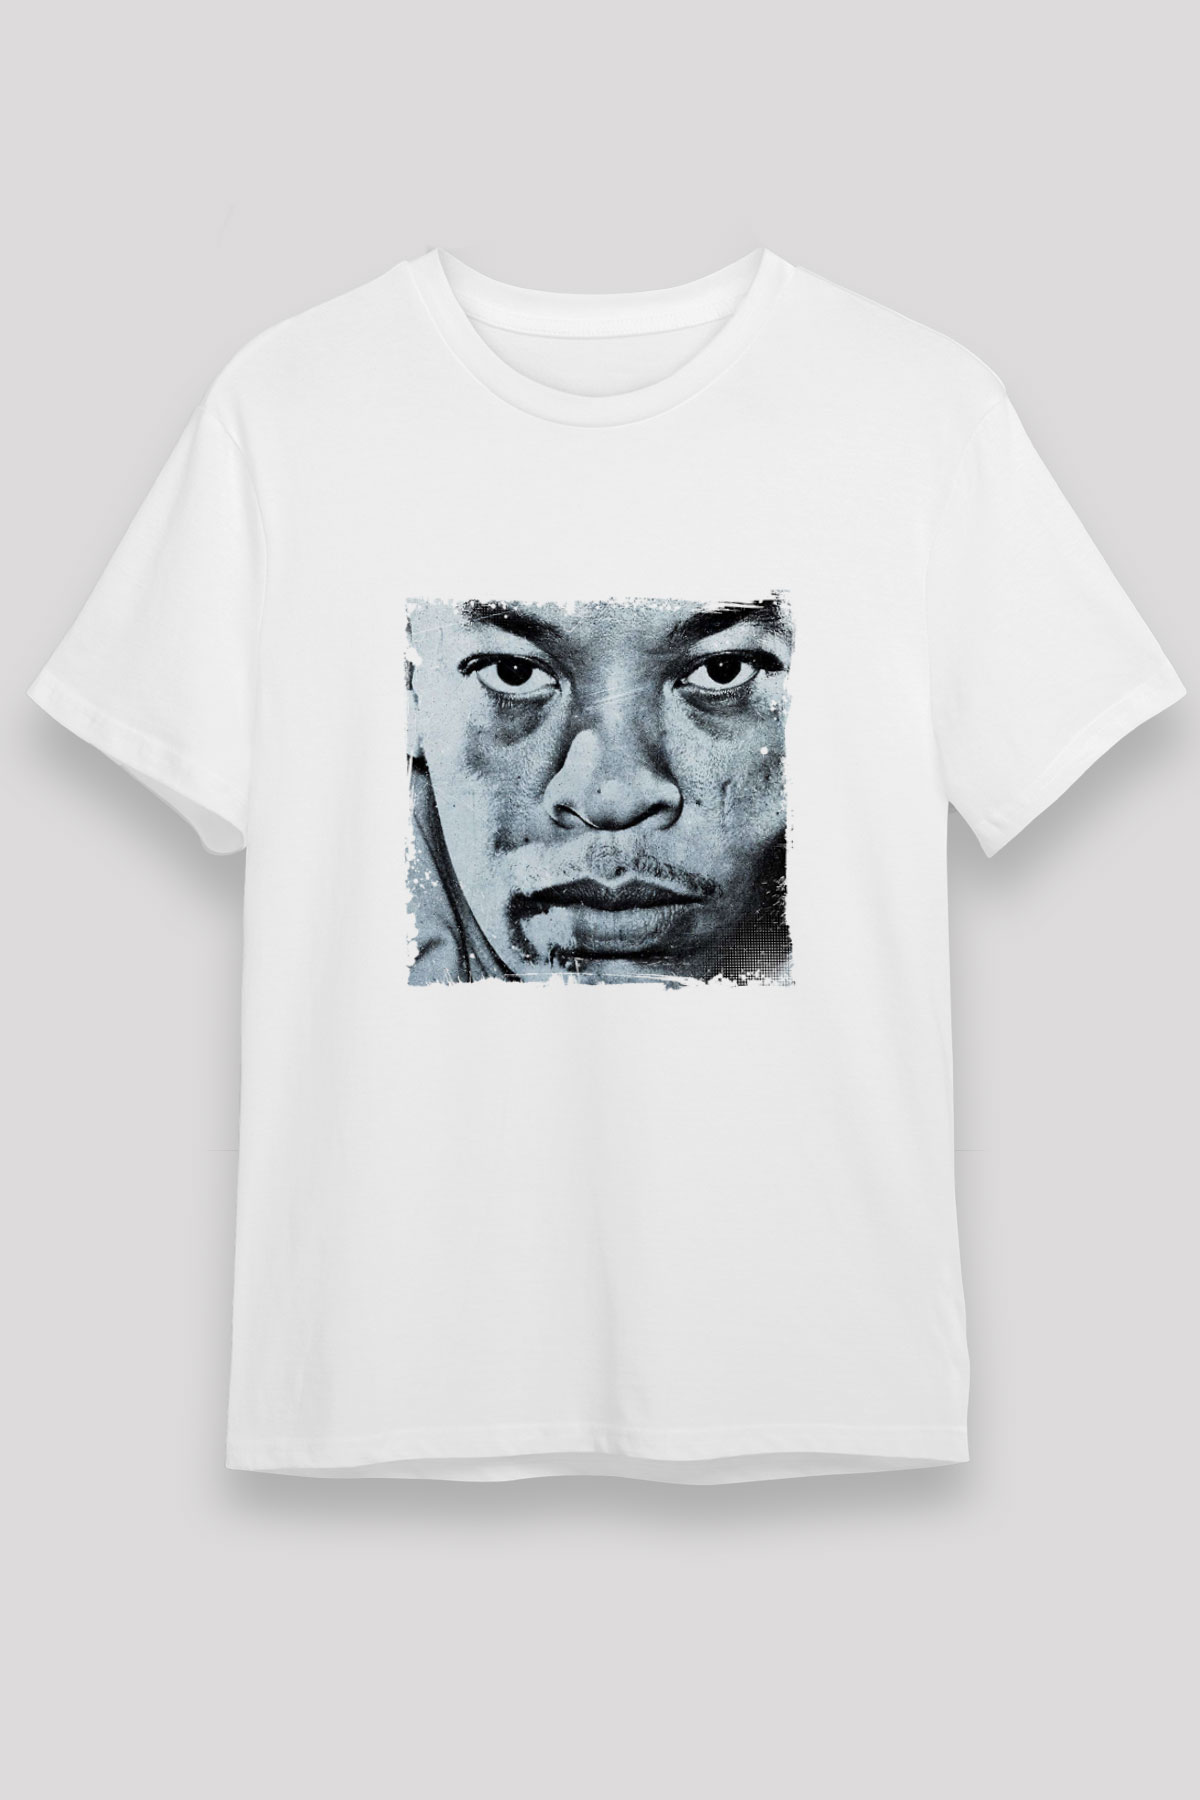 Dr.Dre T shirt,Hip Hop,Rap Tshirt 04/